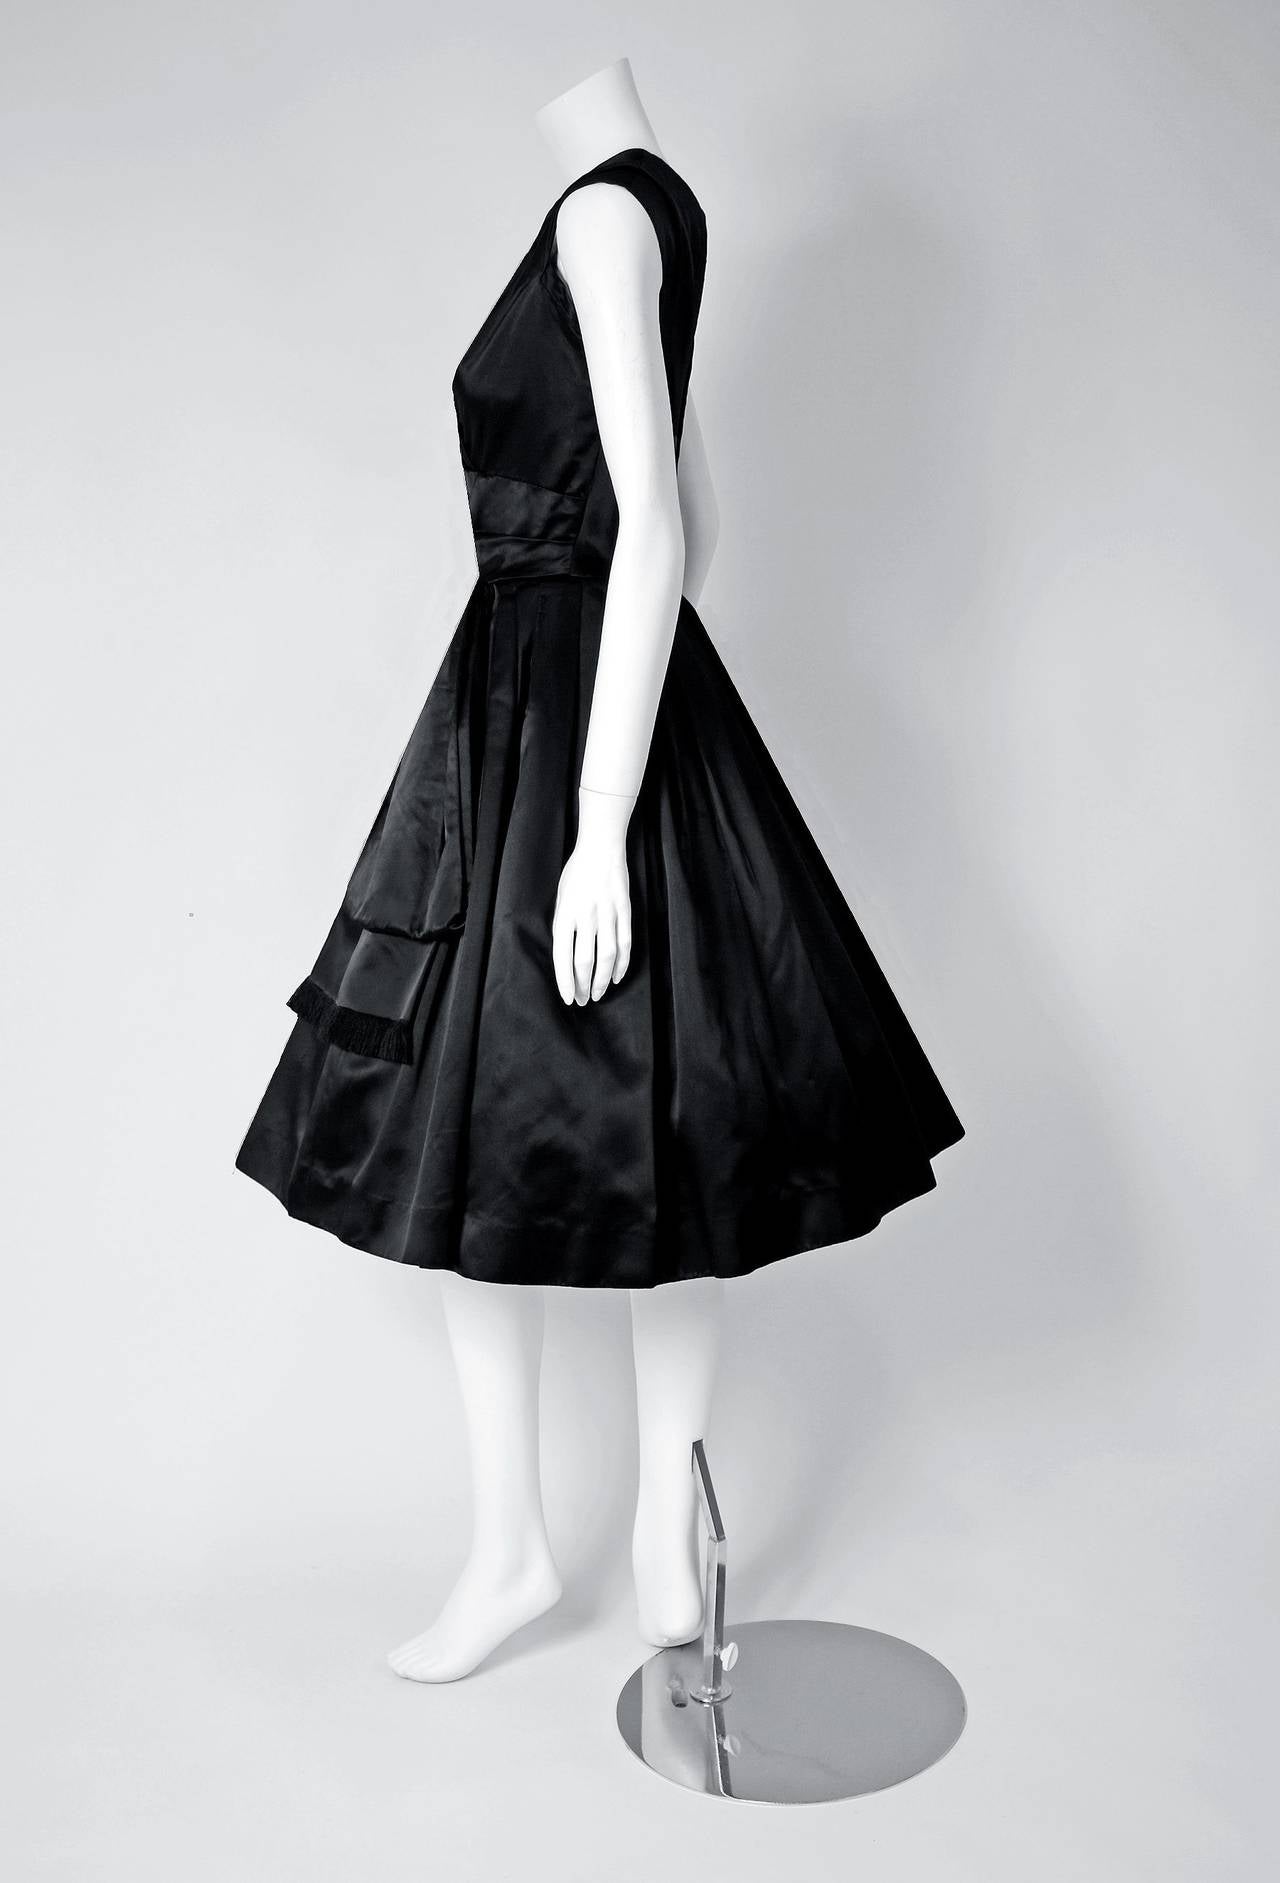 1955 dior dress